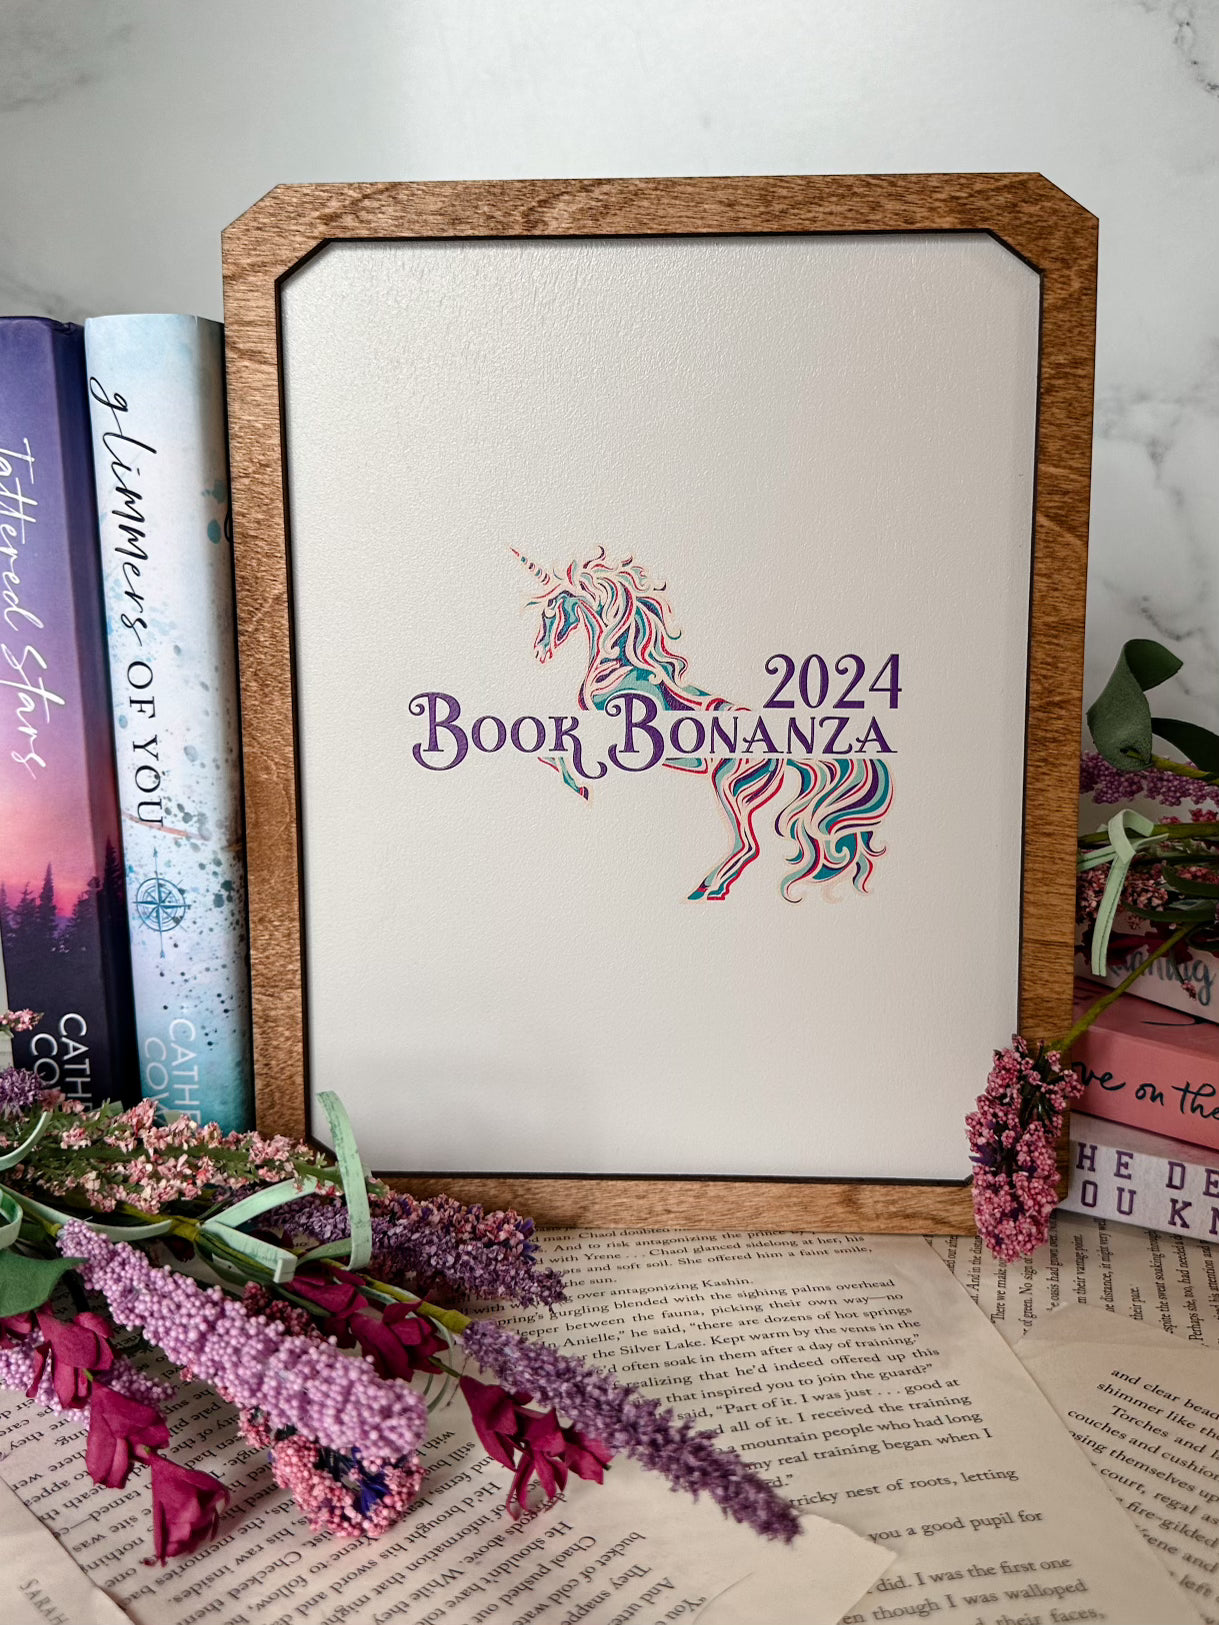 Book Bonanza 2024 signing board FireDrake Artistry™